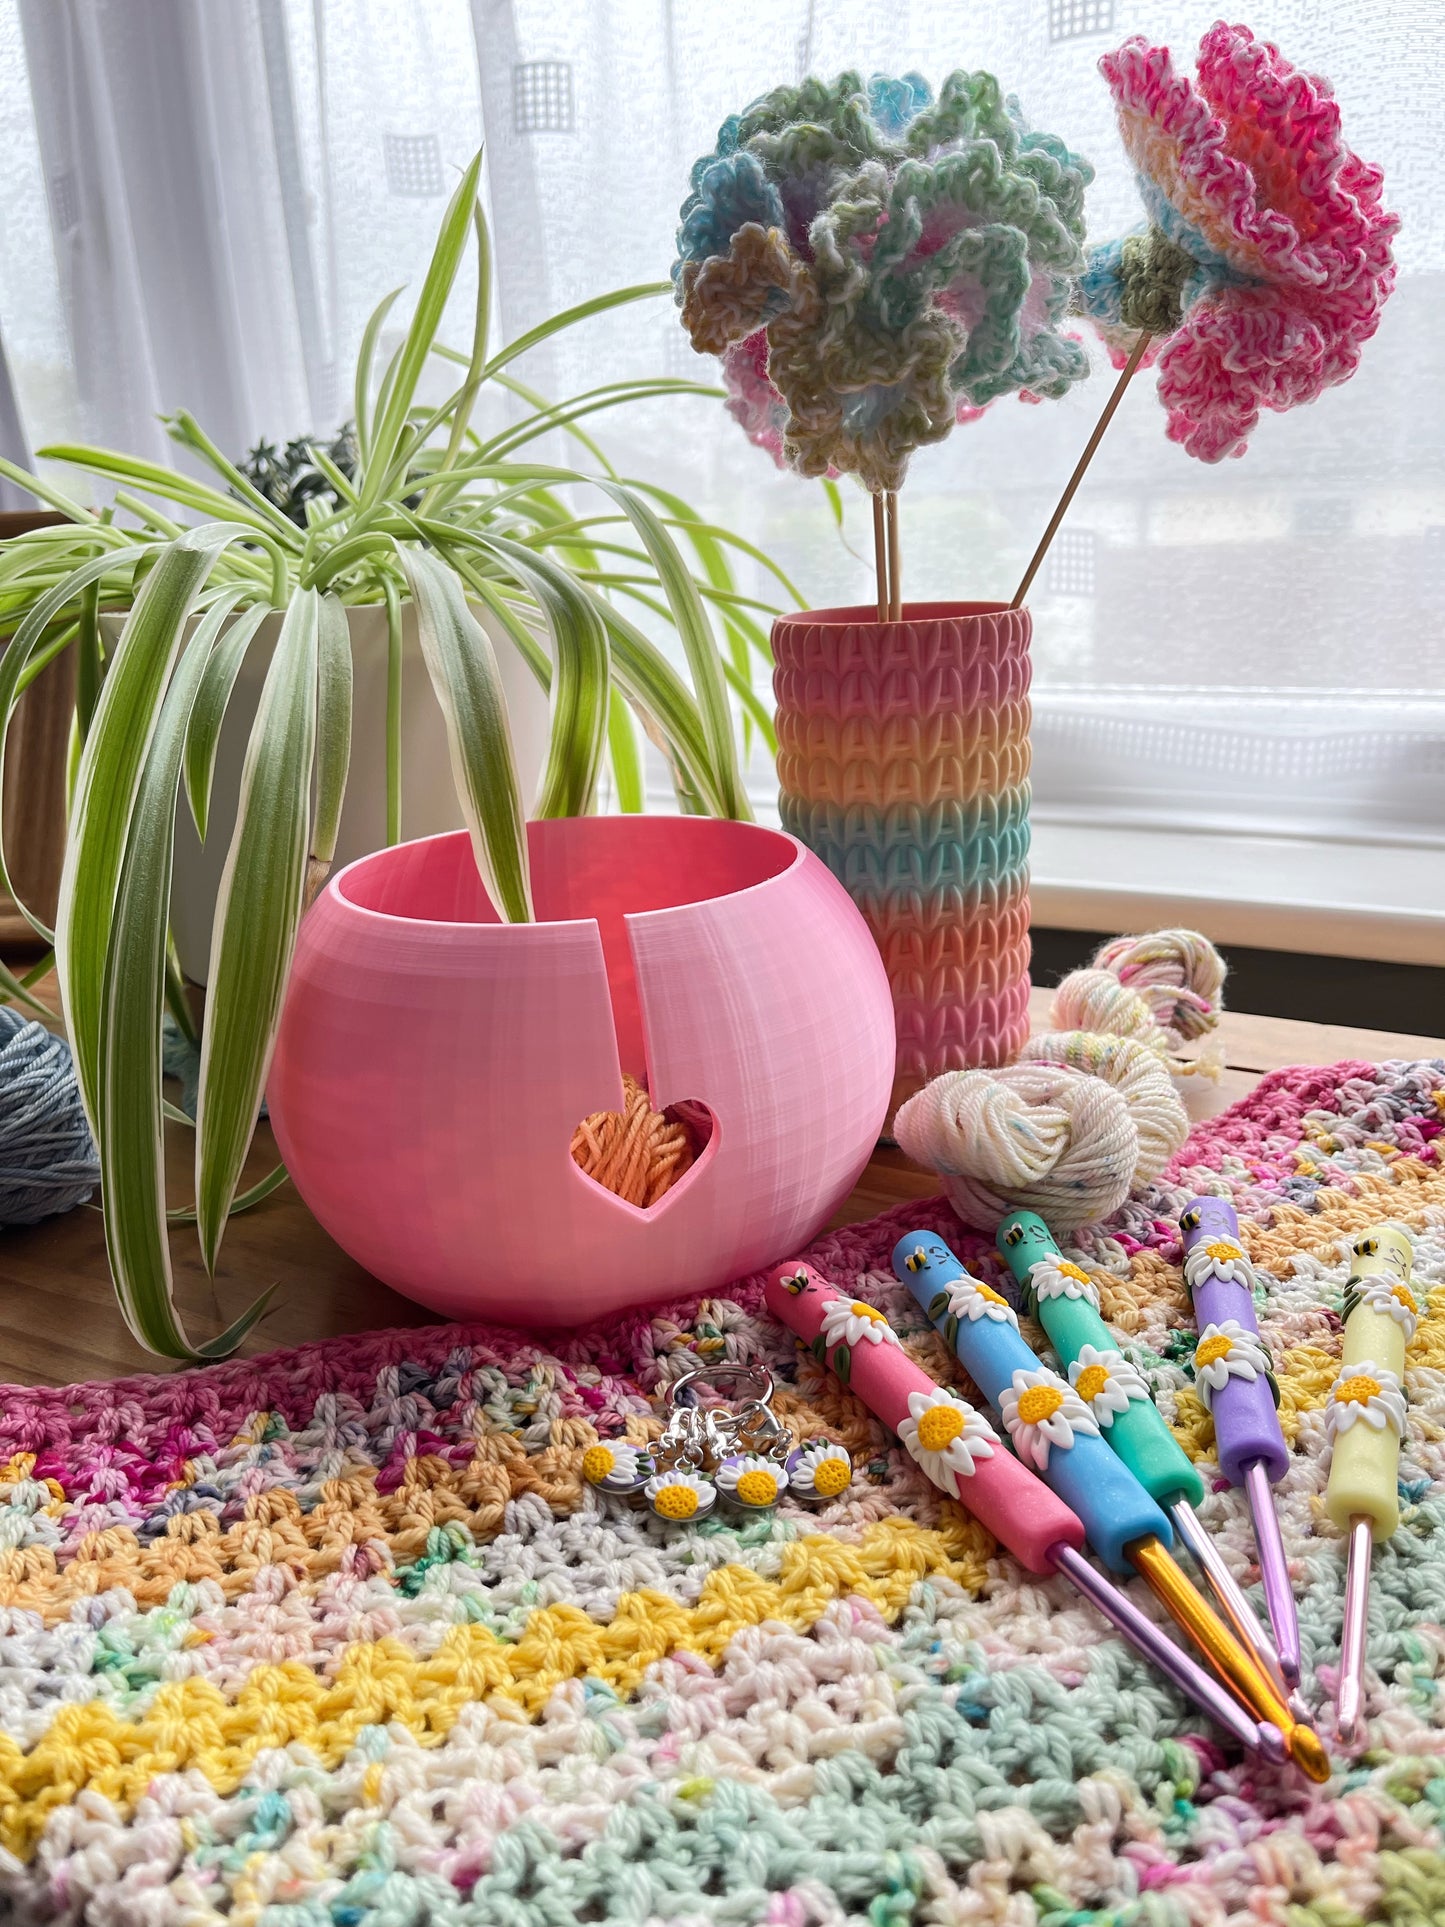 Heart Cut Out Yarn Bowl, 3D Printed Colourful Yarn Bowl, Knitting or Crochet Wool Bowl